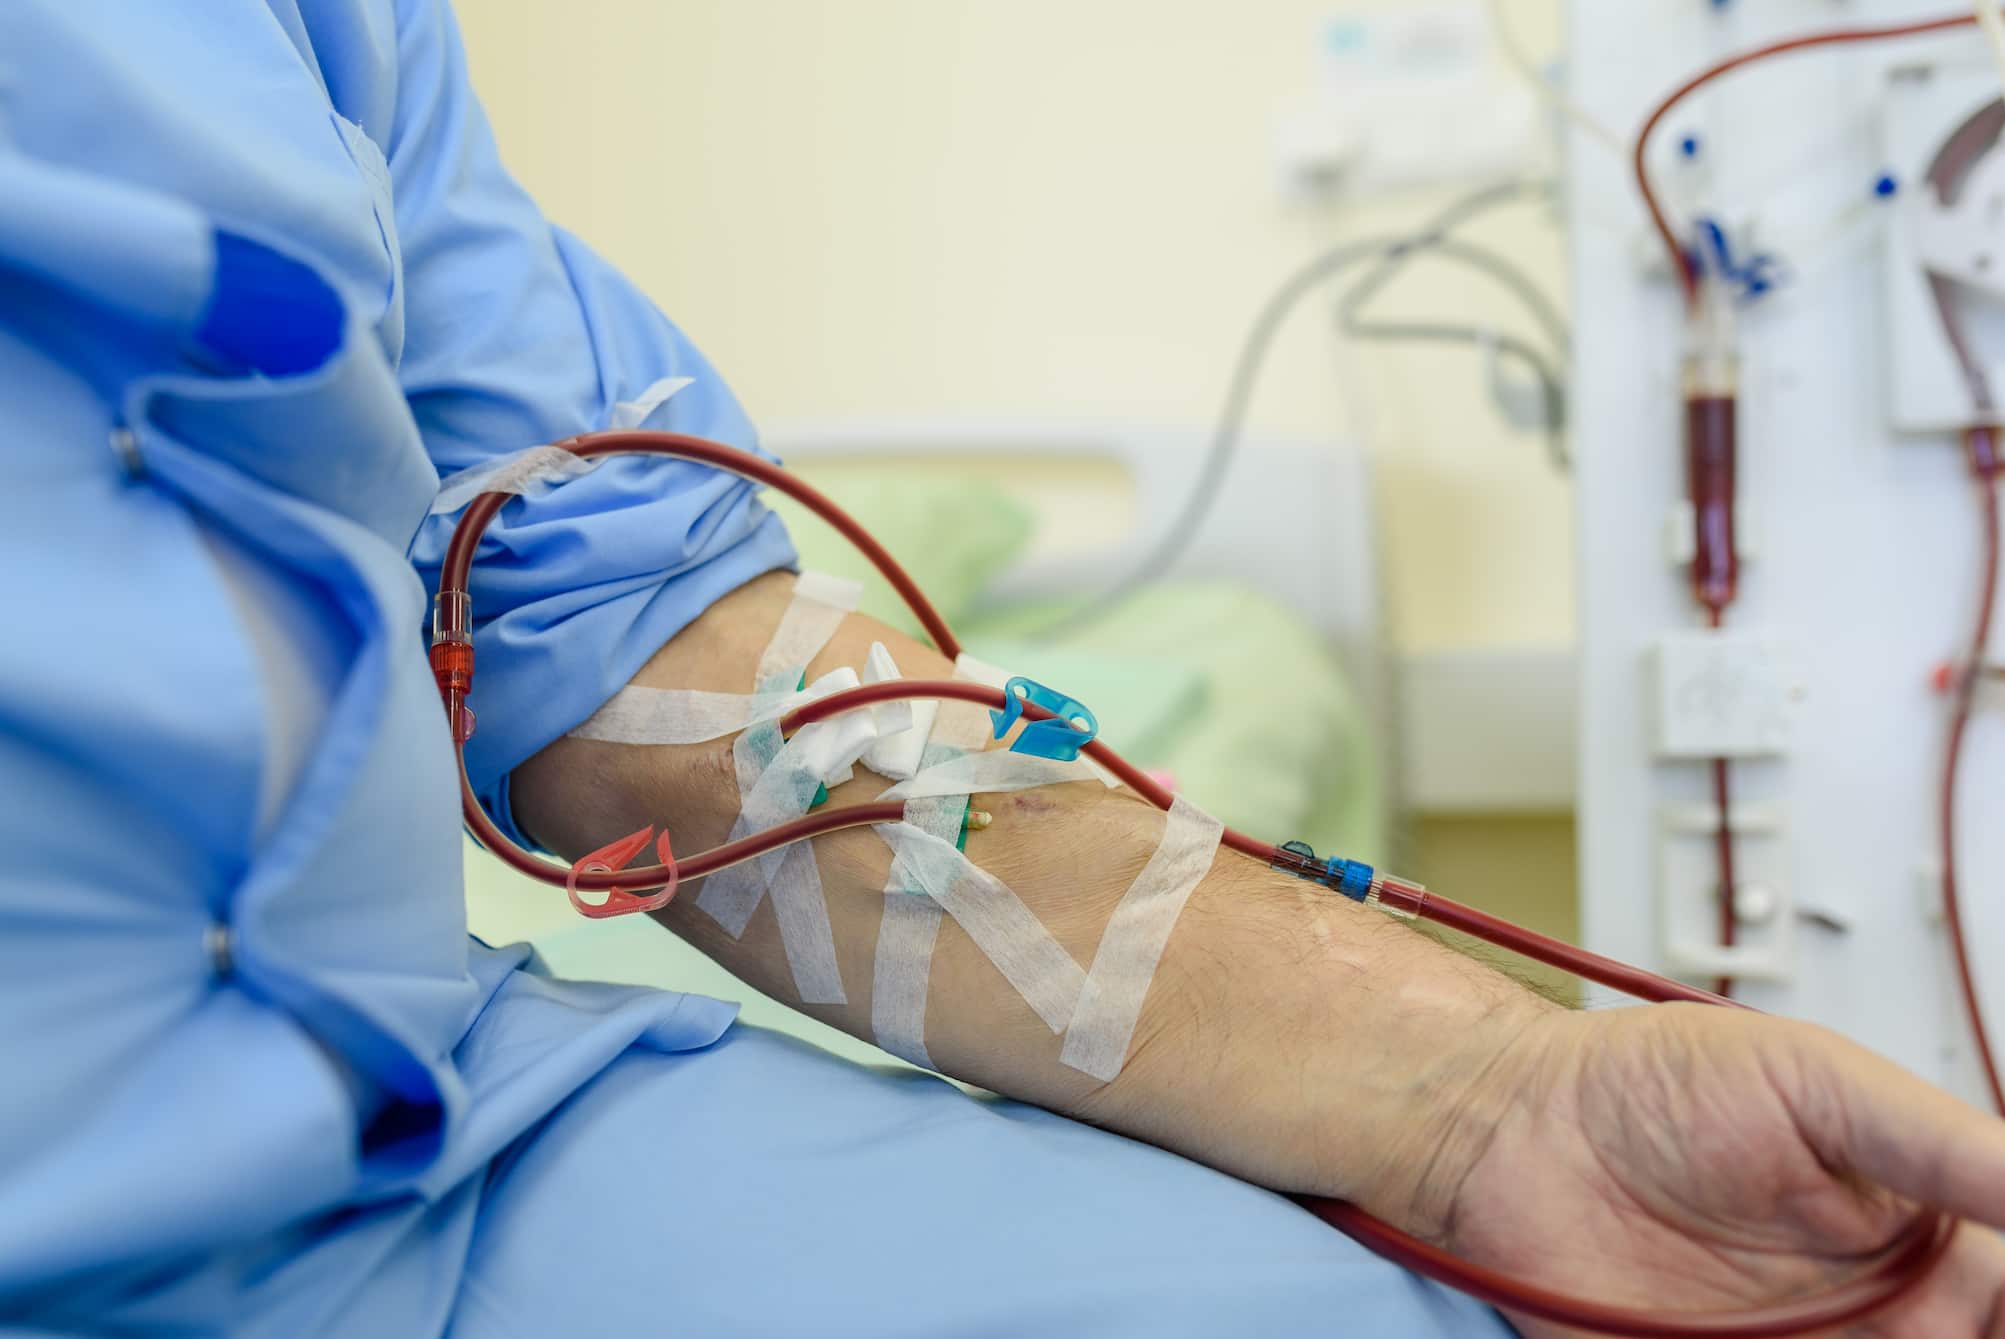 Hemodialysis vs Peritoneal Dialysis